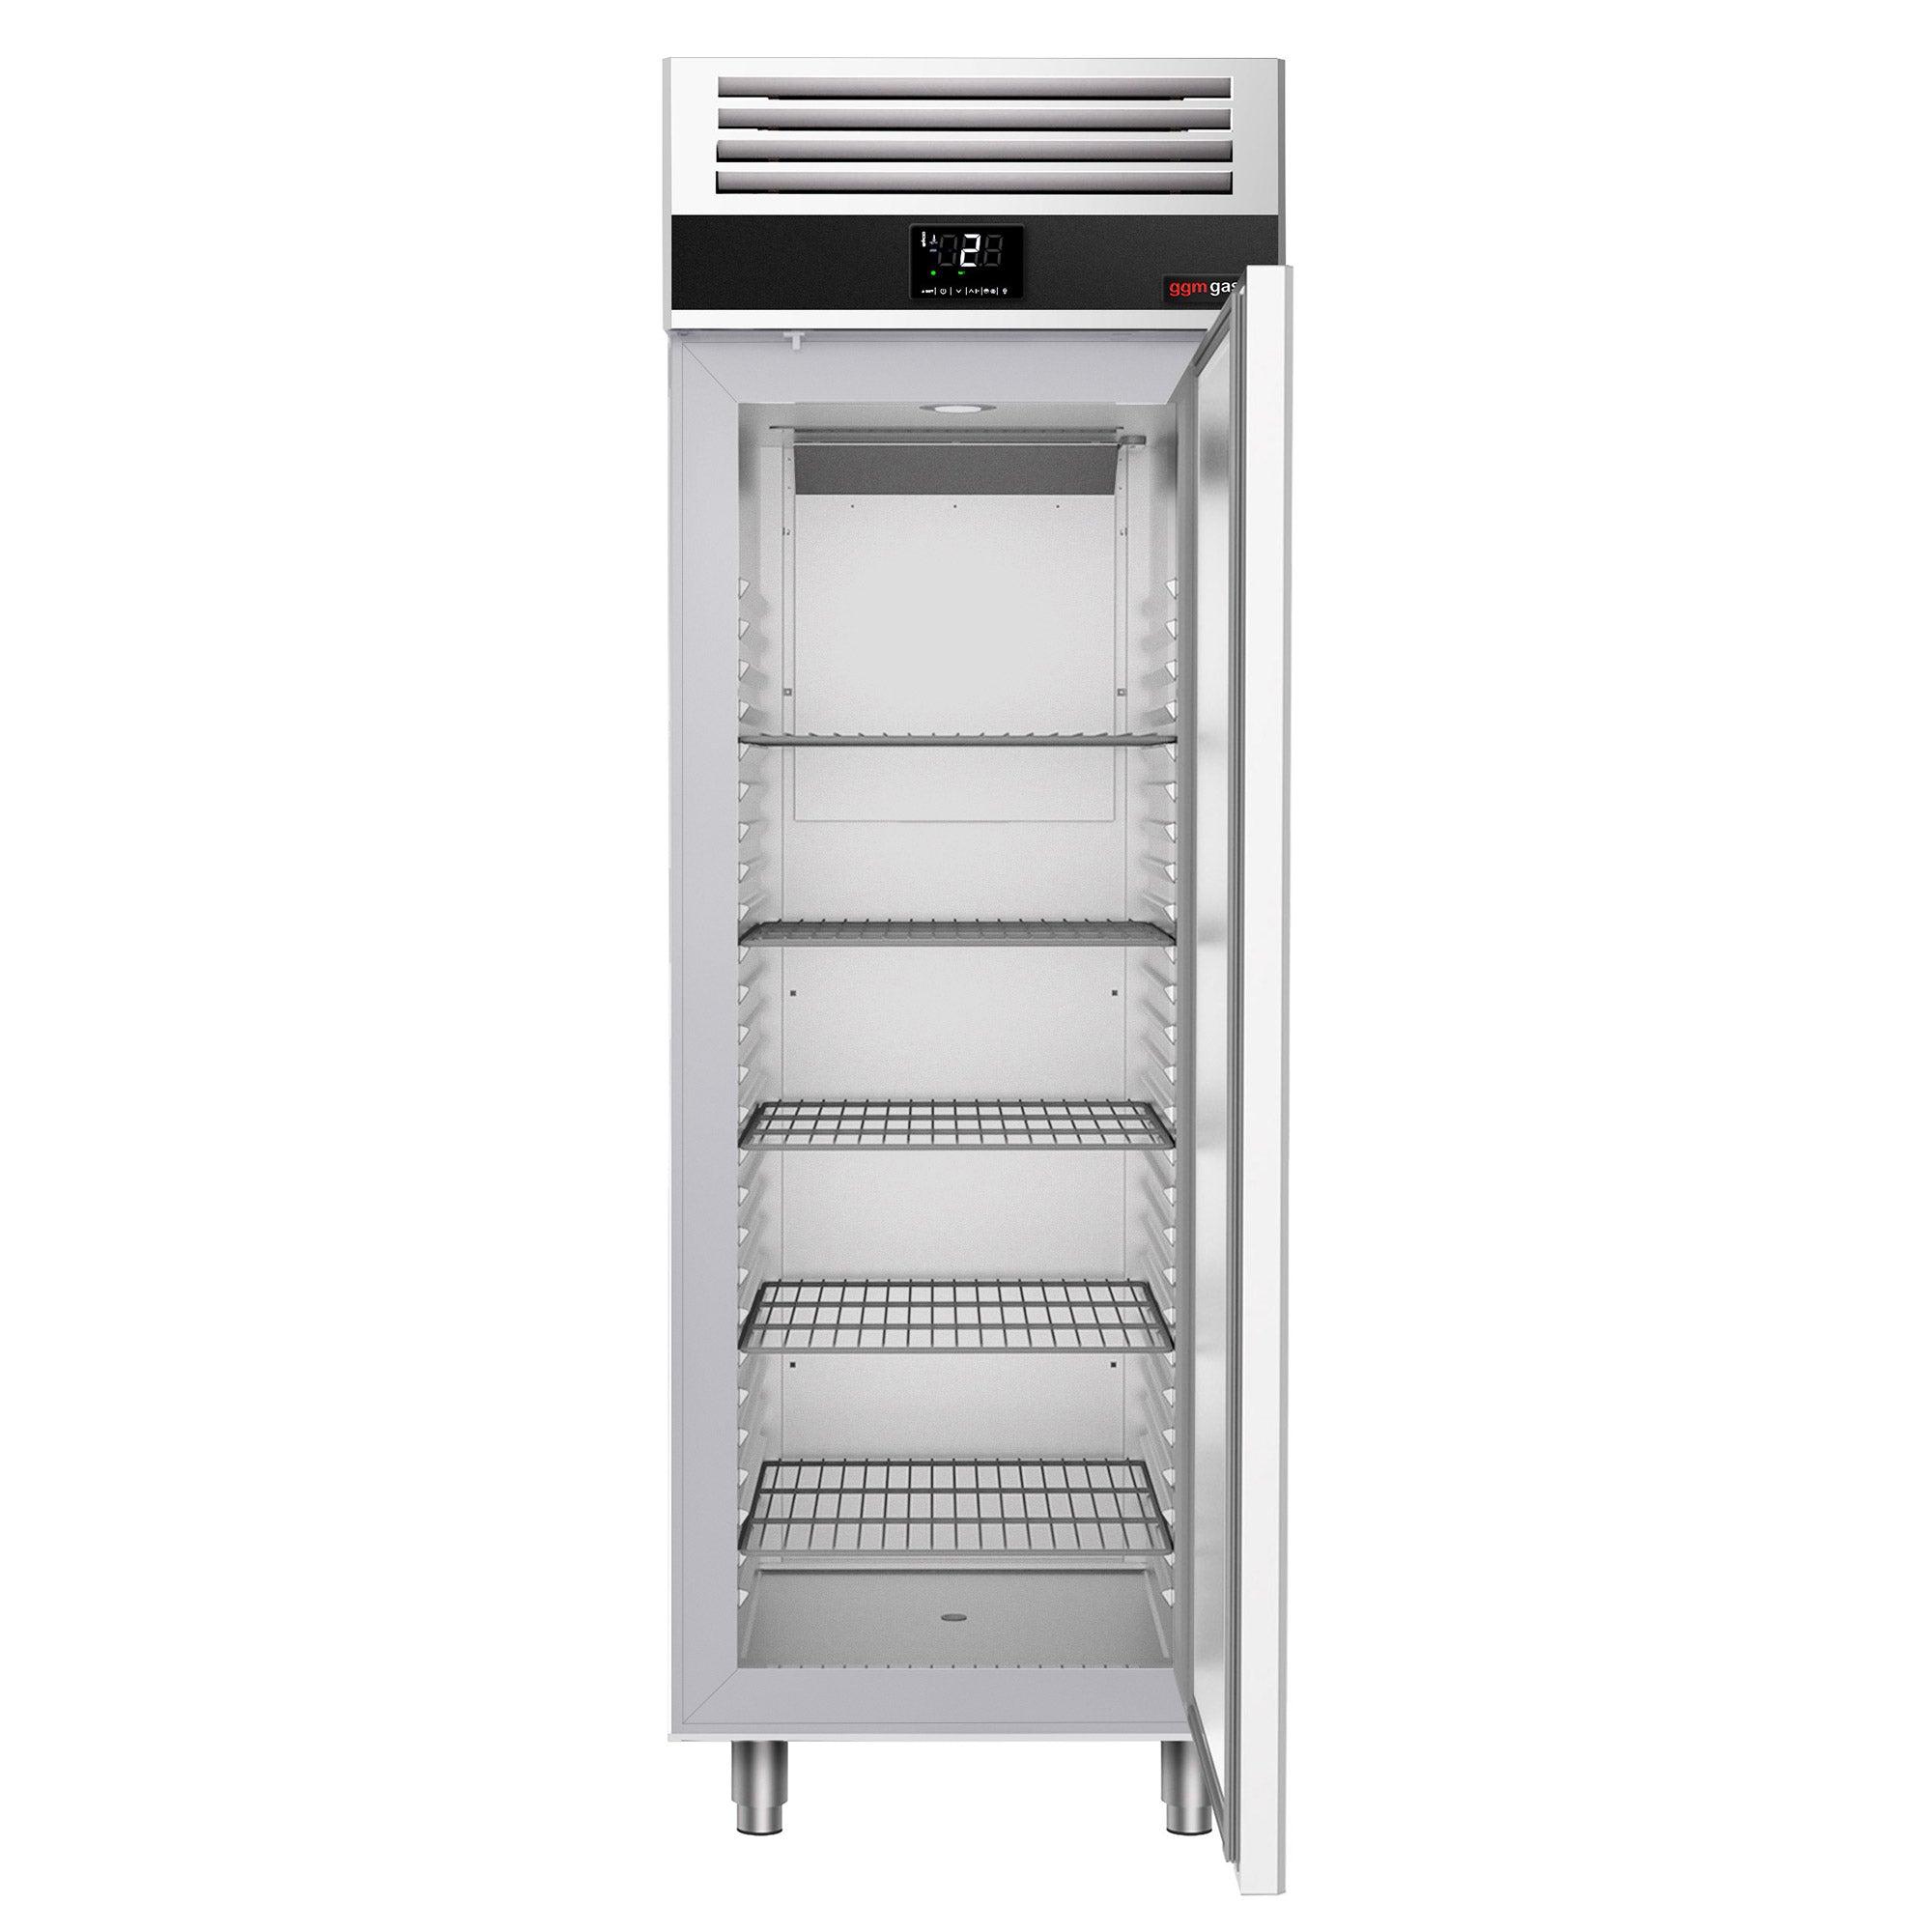 Køleskab - 0,7 x 0,81 m - 700 liter - med 1 låge i rustfrit stål